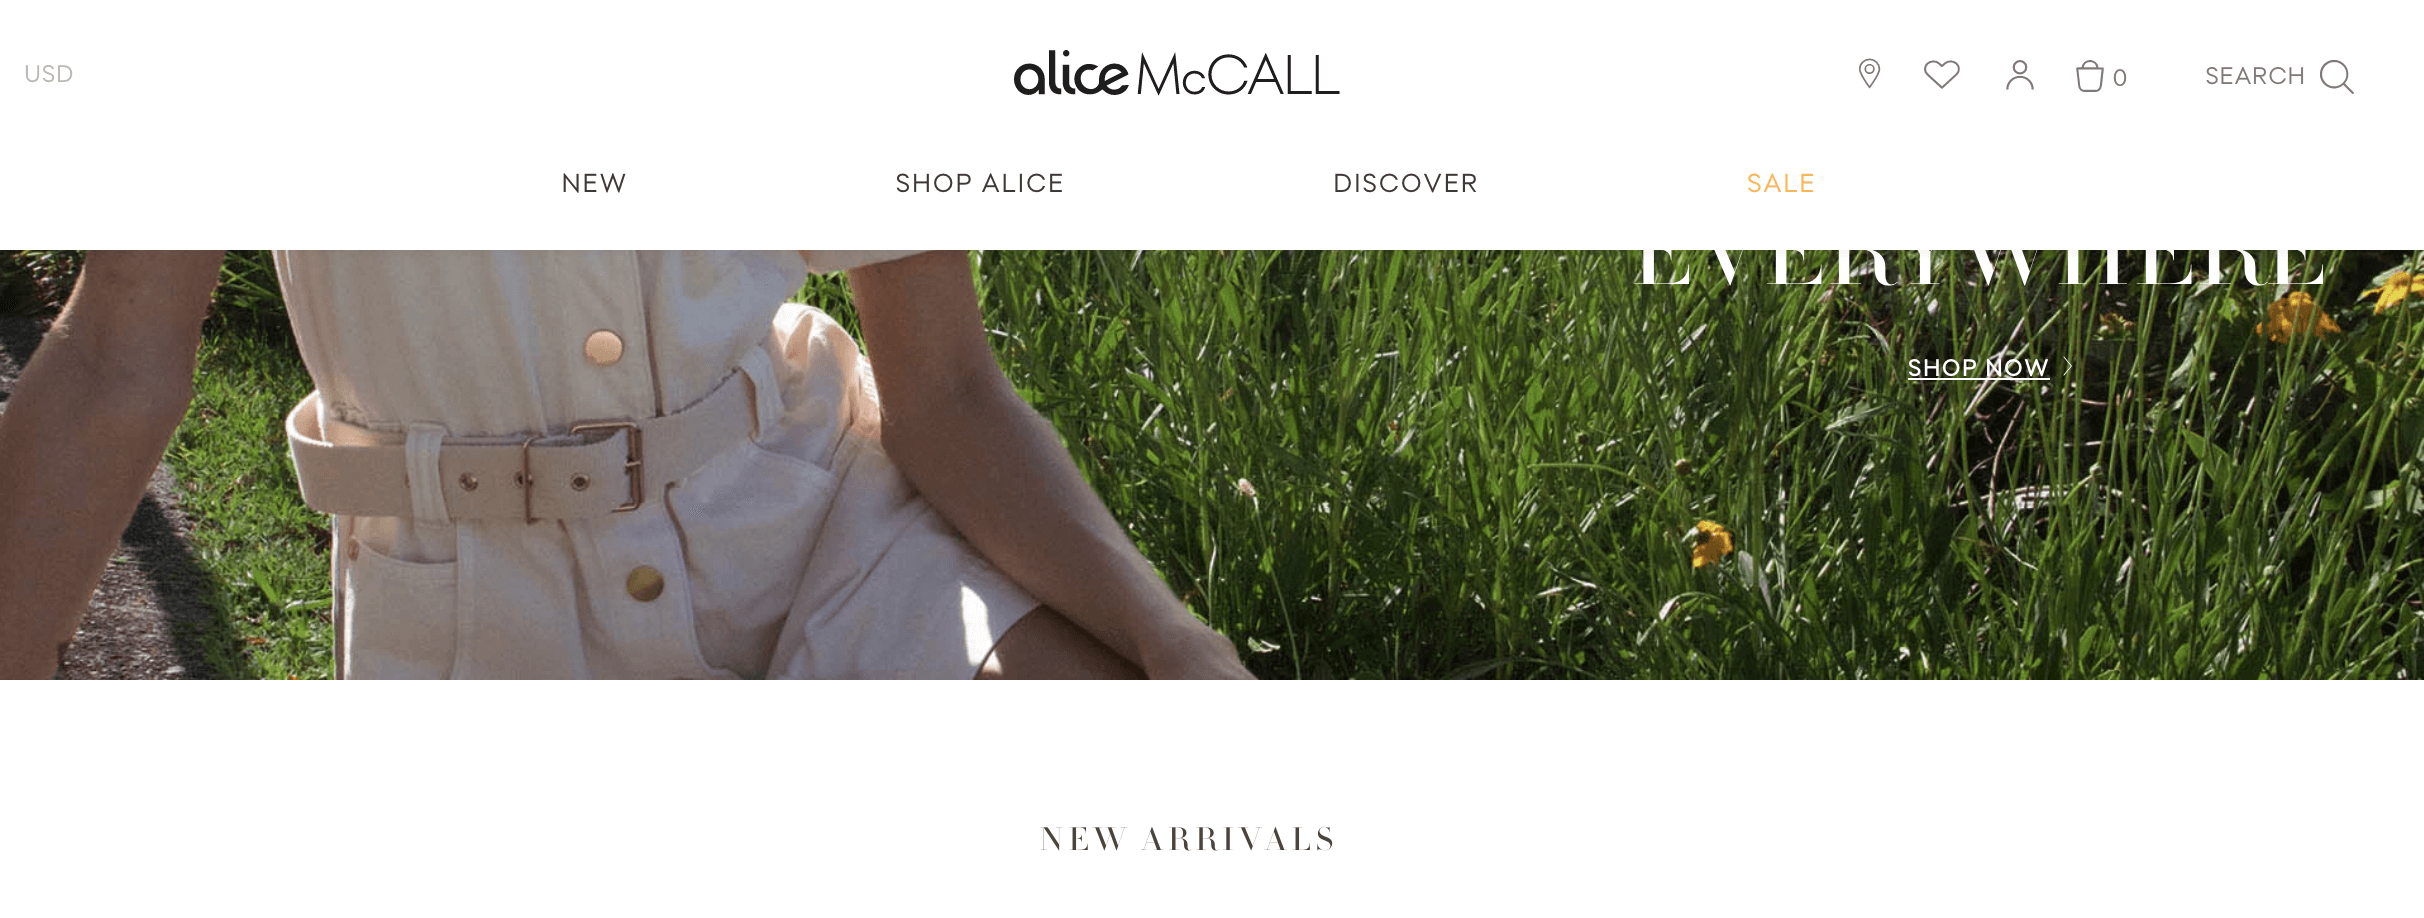 alice mccall官网-alice mccall澳洲官网-澳大利亚时尚品牌